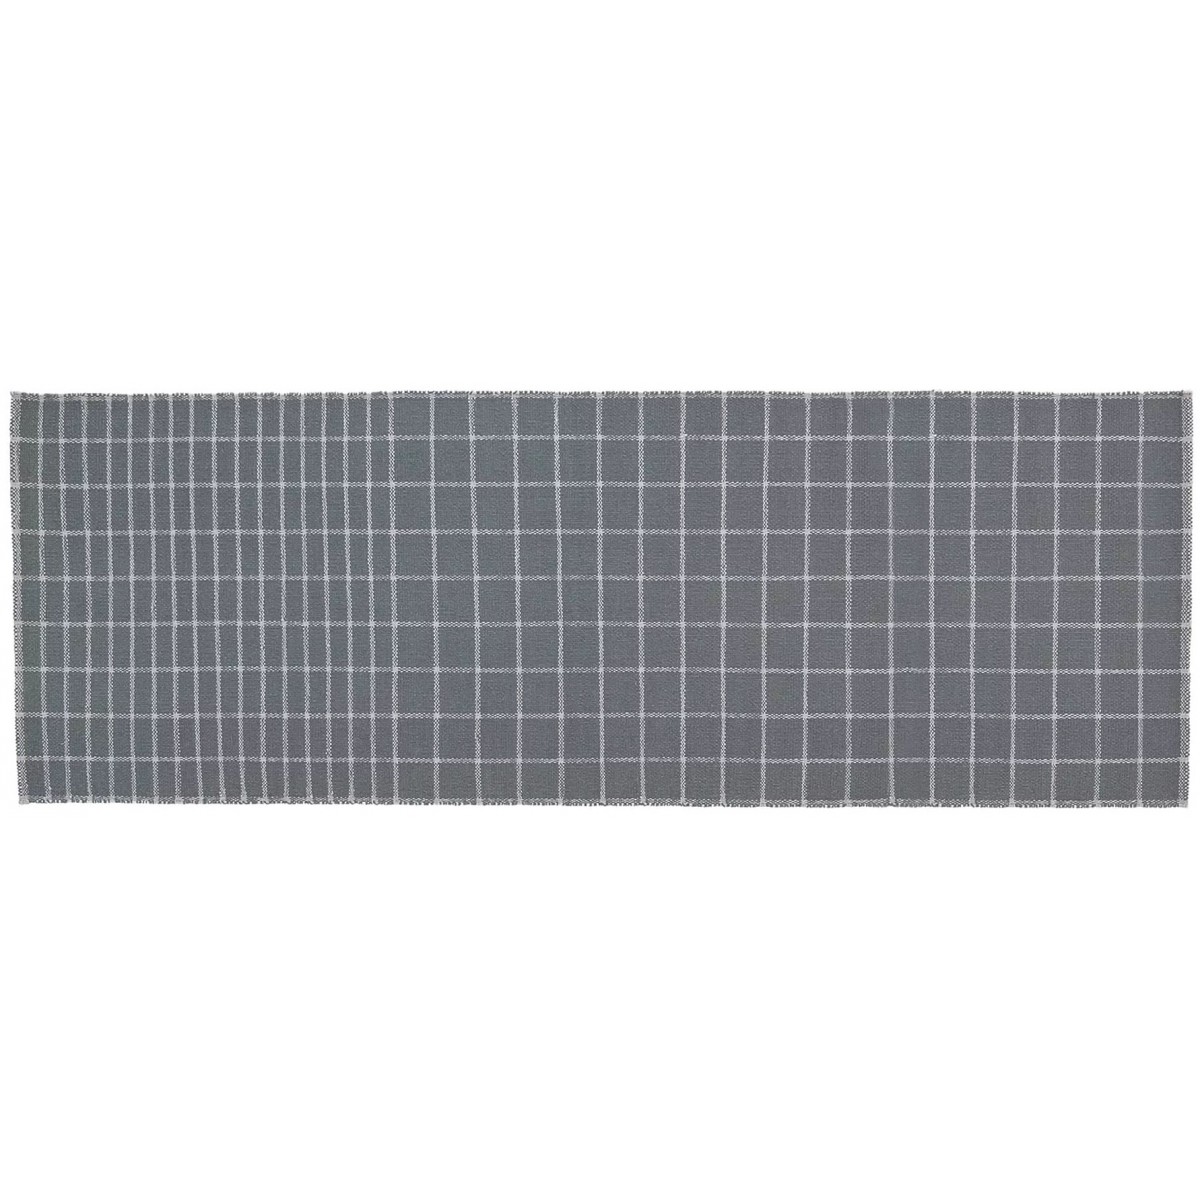 80x240cm - tapis Tiles 2